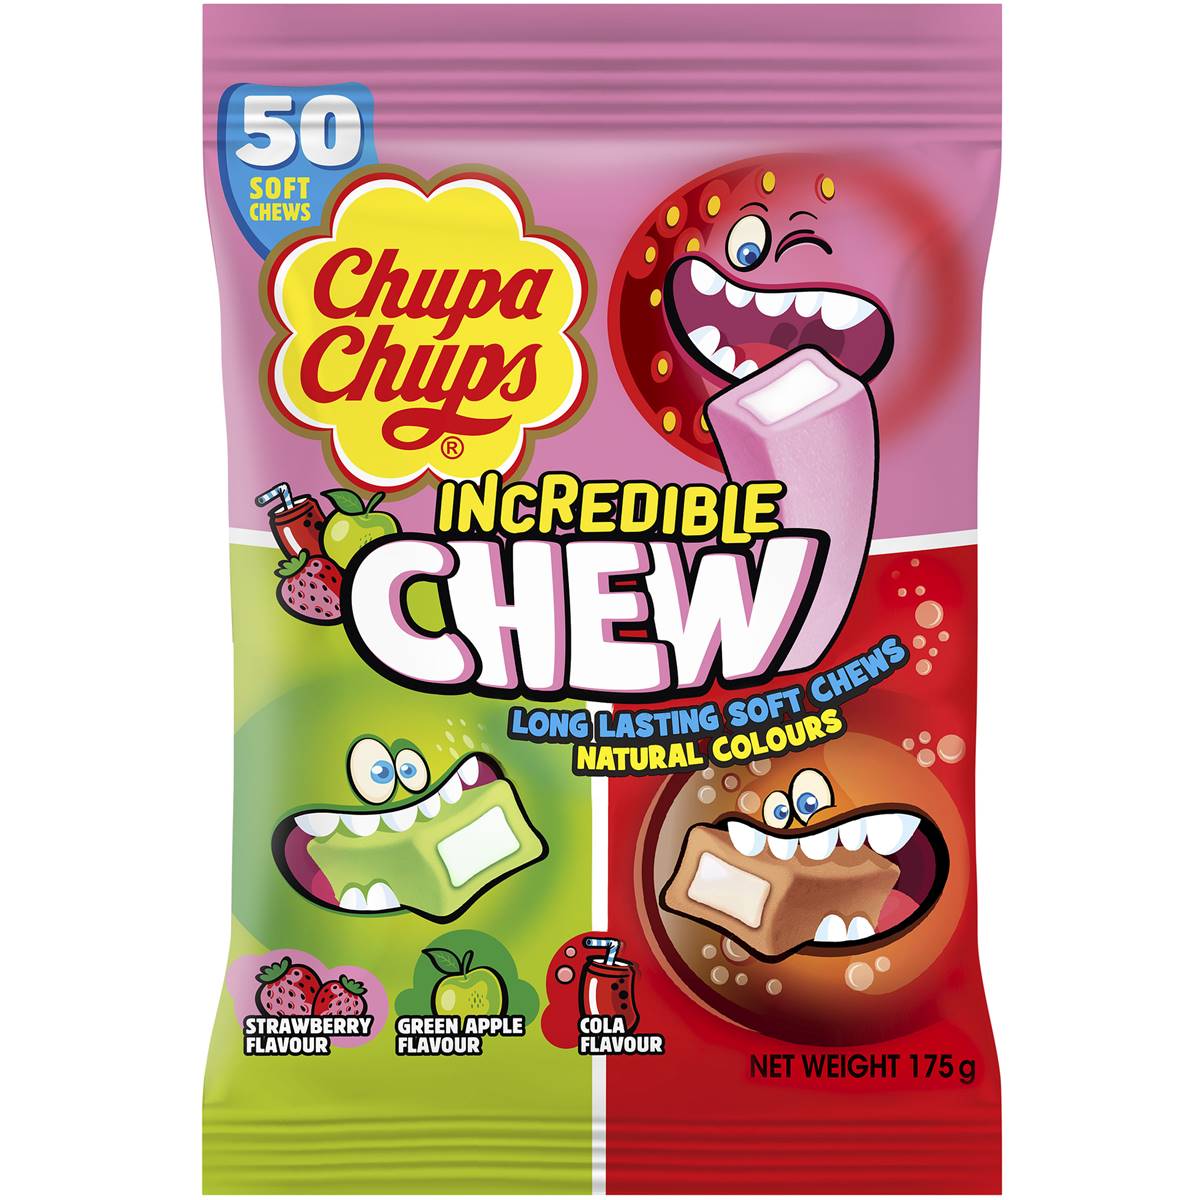 Chupa Chups Incredible Chew Case